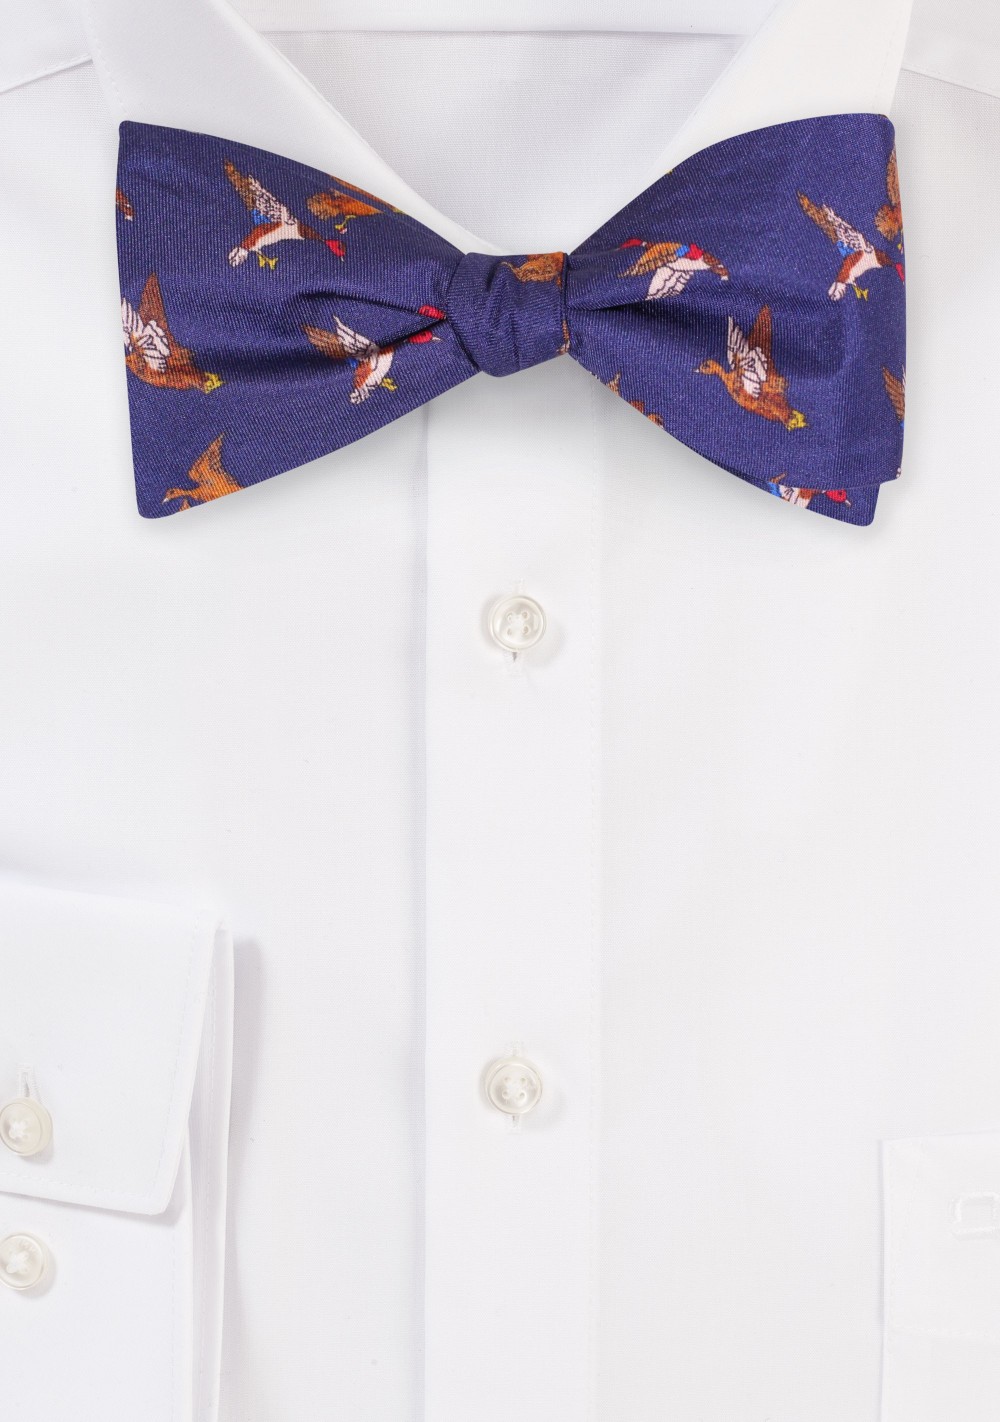 Self Tie Silk Bow Tie with Flying Ducks in Navy